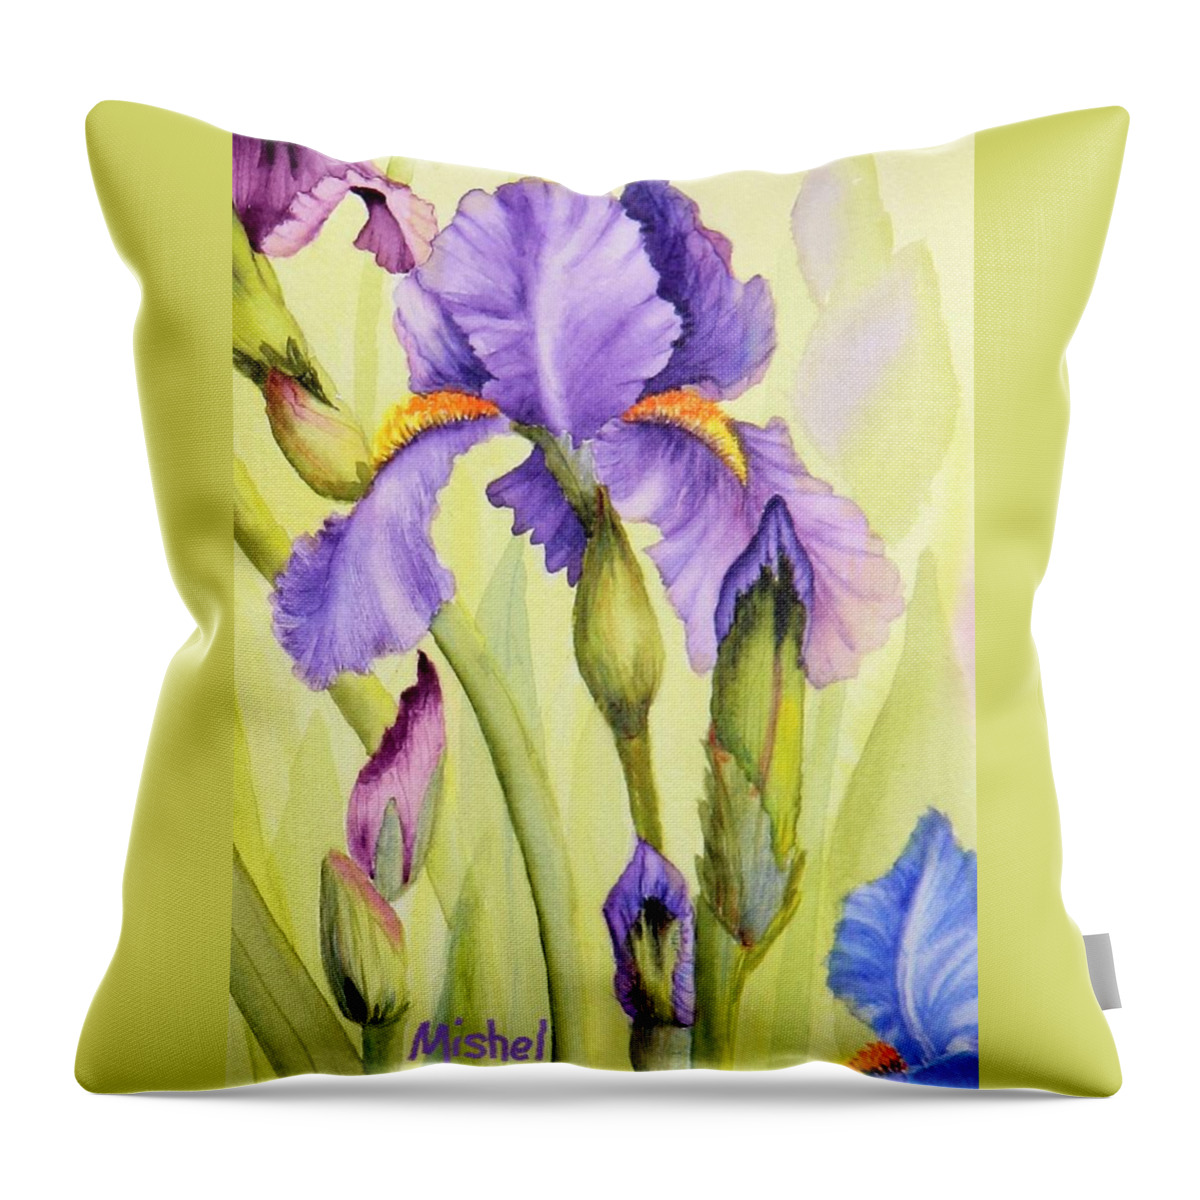 Iris Art Throw Pillow featuring the painting Single Iris by Mishel Vanderten